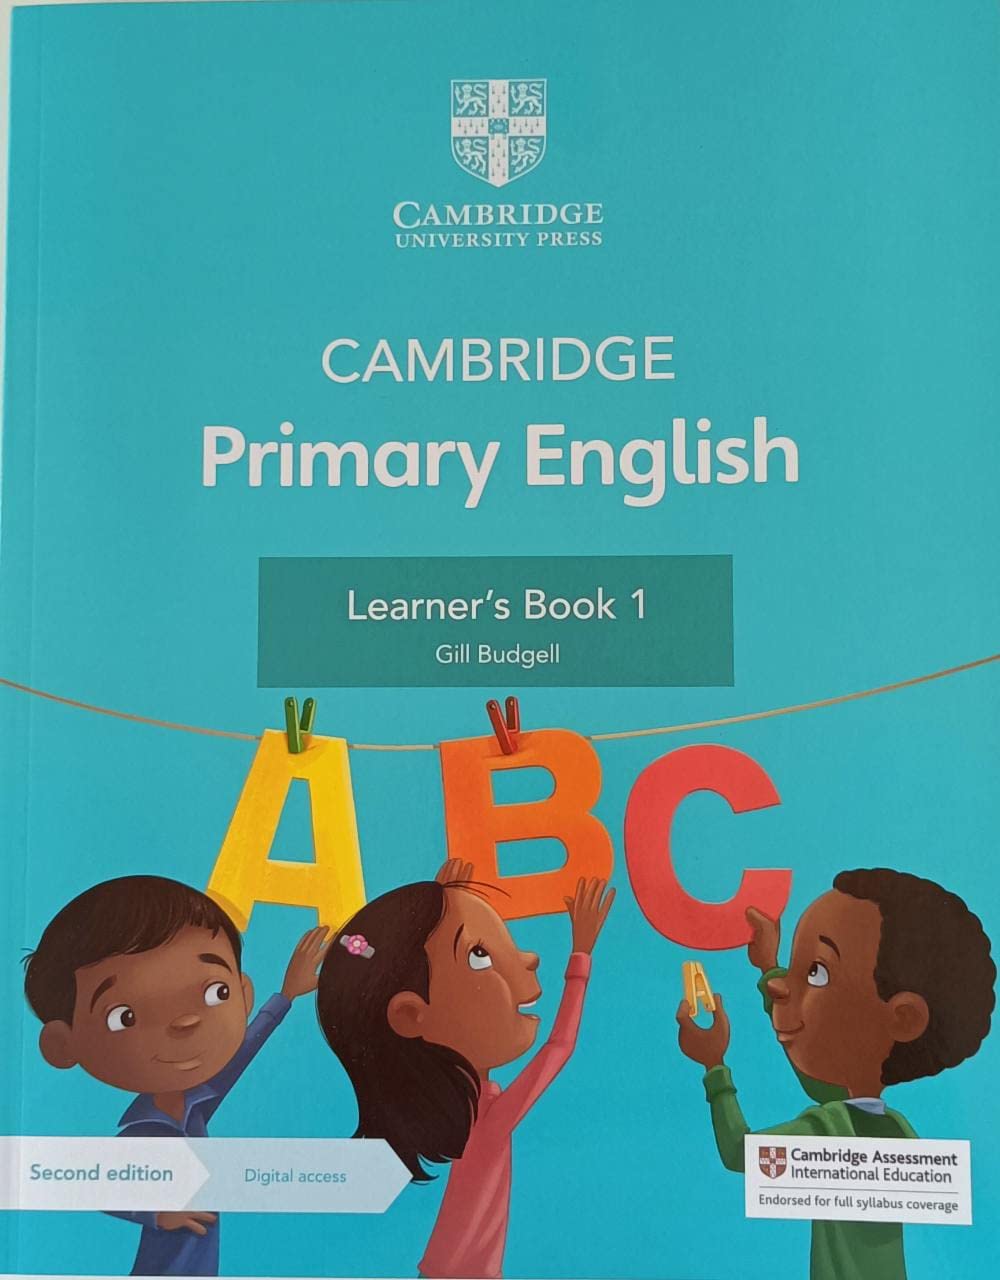 Cambridge Primary English Learner's Book 1